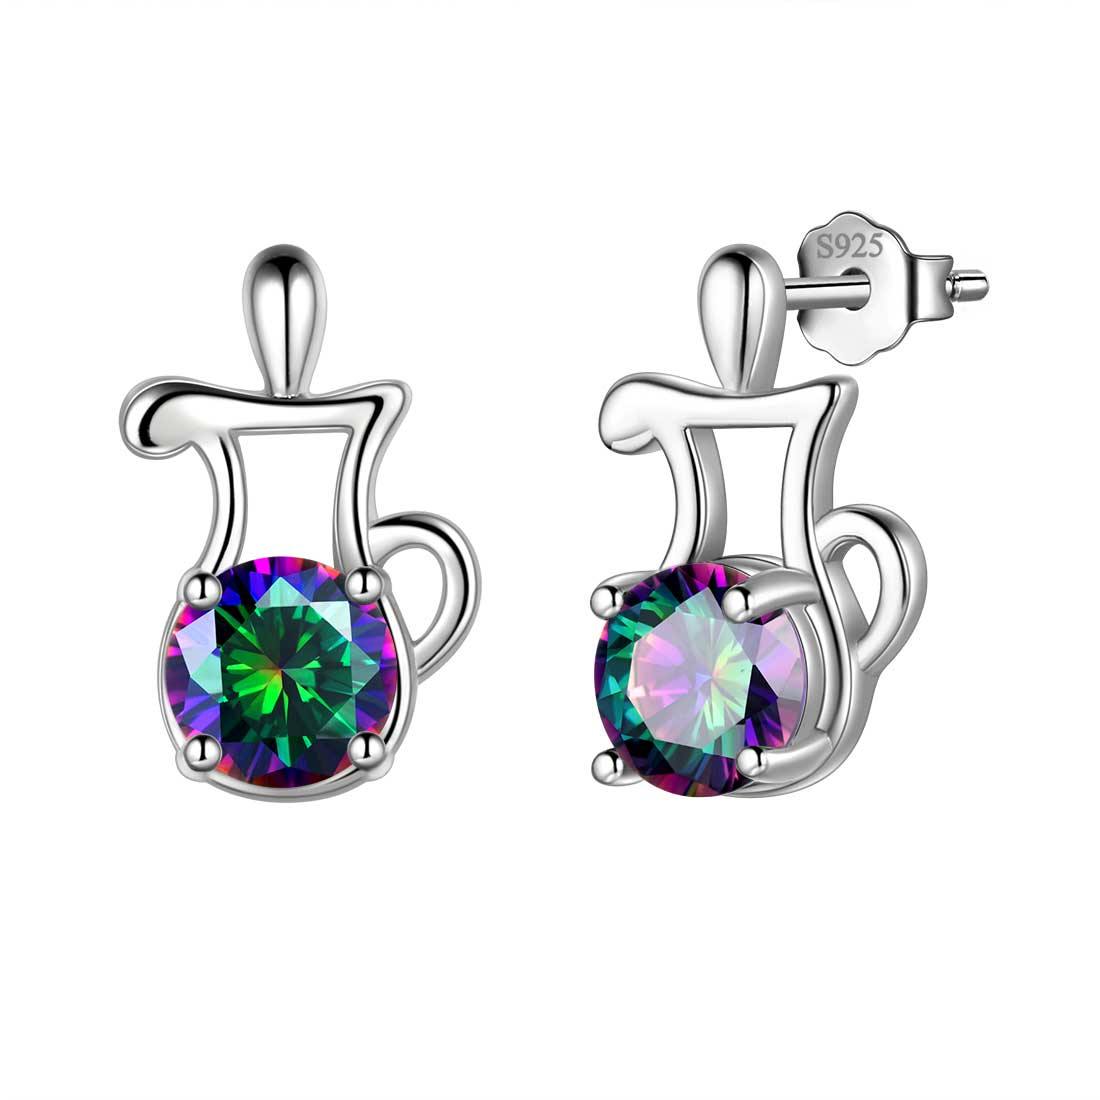 Aquarius Stud Earrings Sterling Silver Mystic Rainbow Topaz Aurora Tears Jewelry